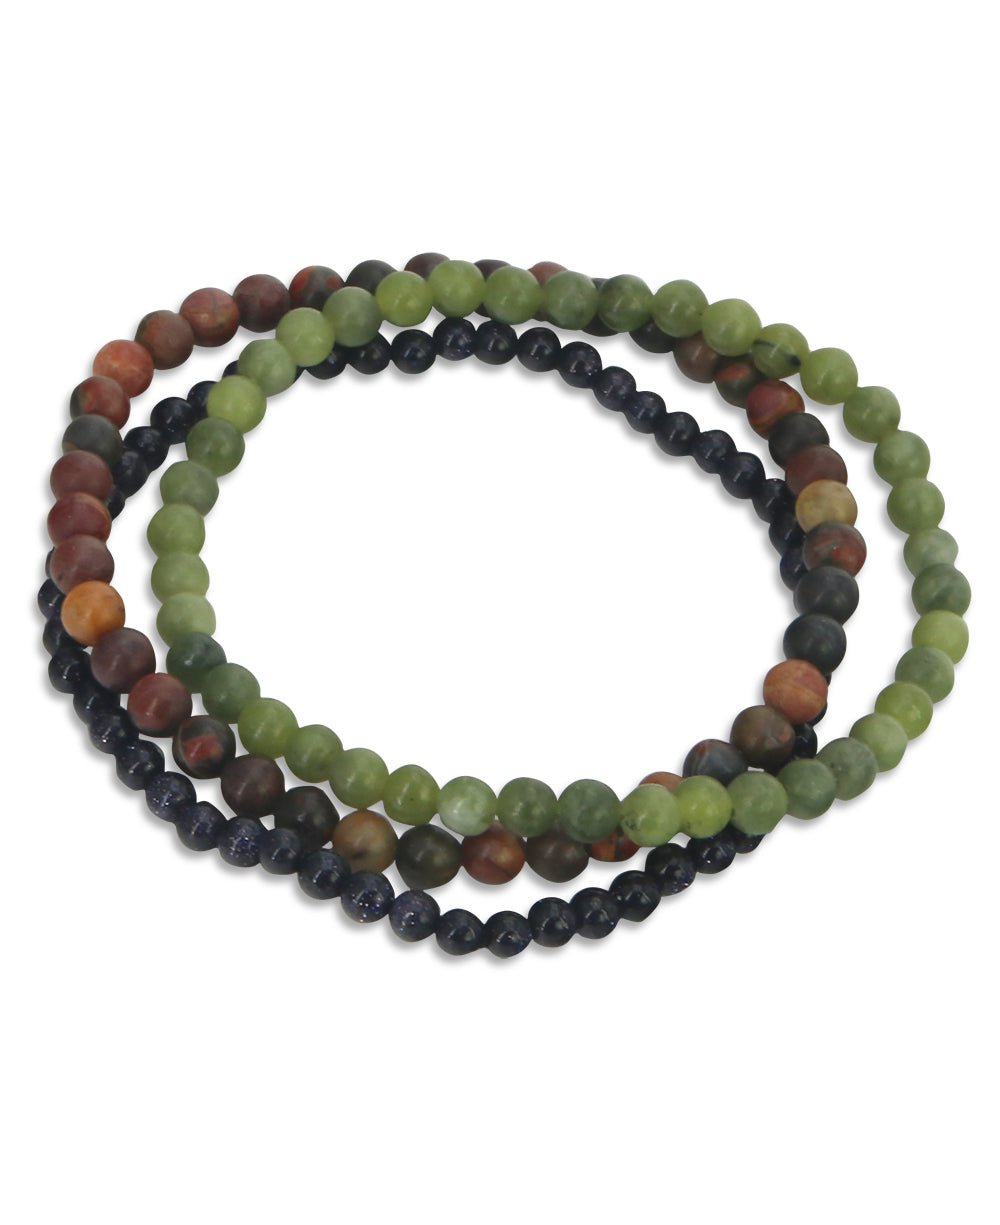 Energy Bracelets for Nurturing and Well-Being, Set of 3 - Bracelets